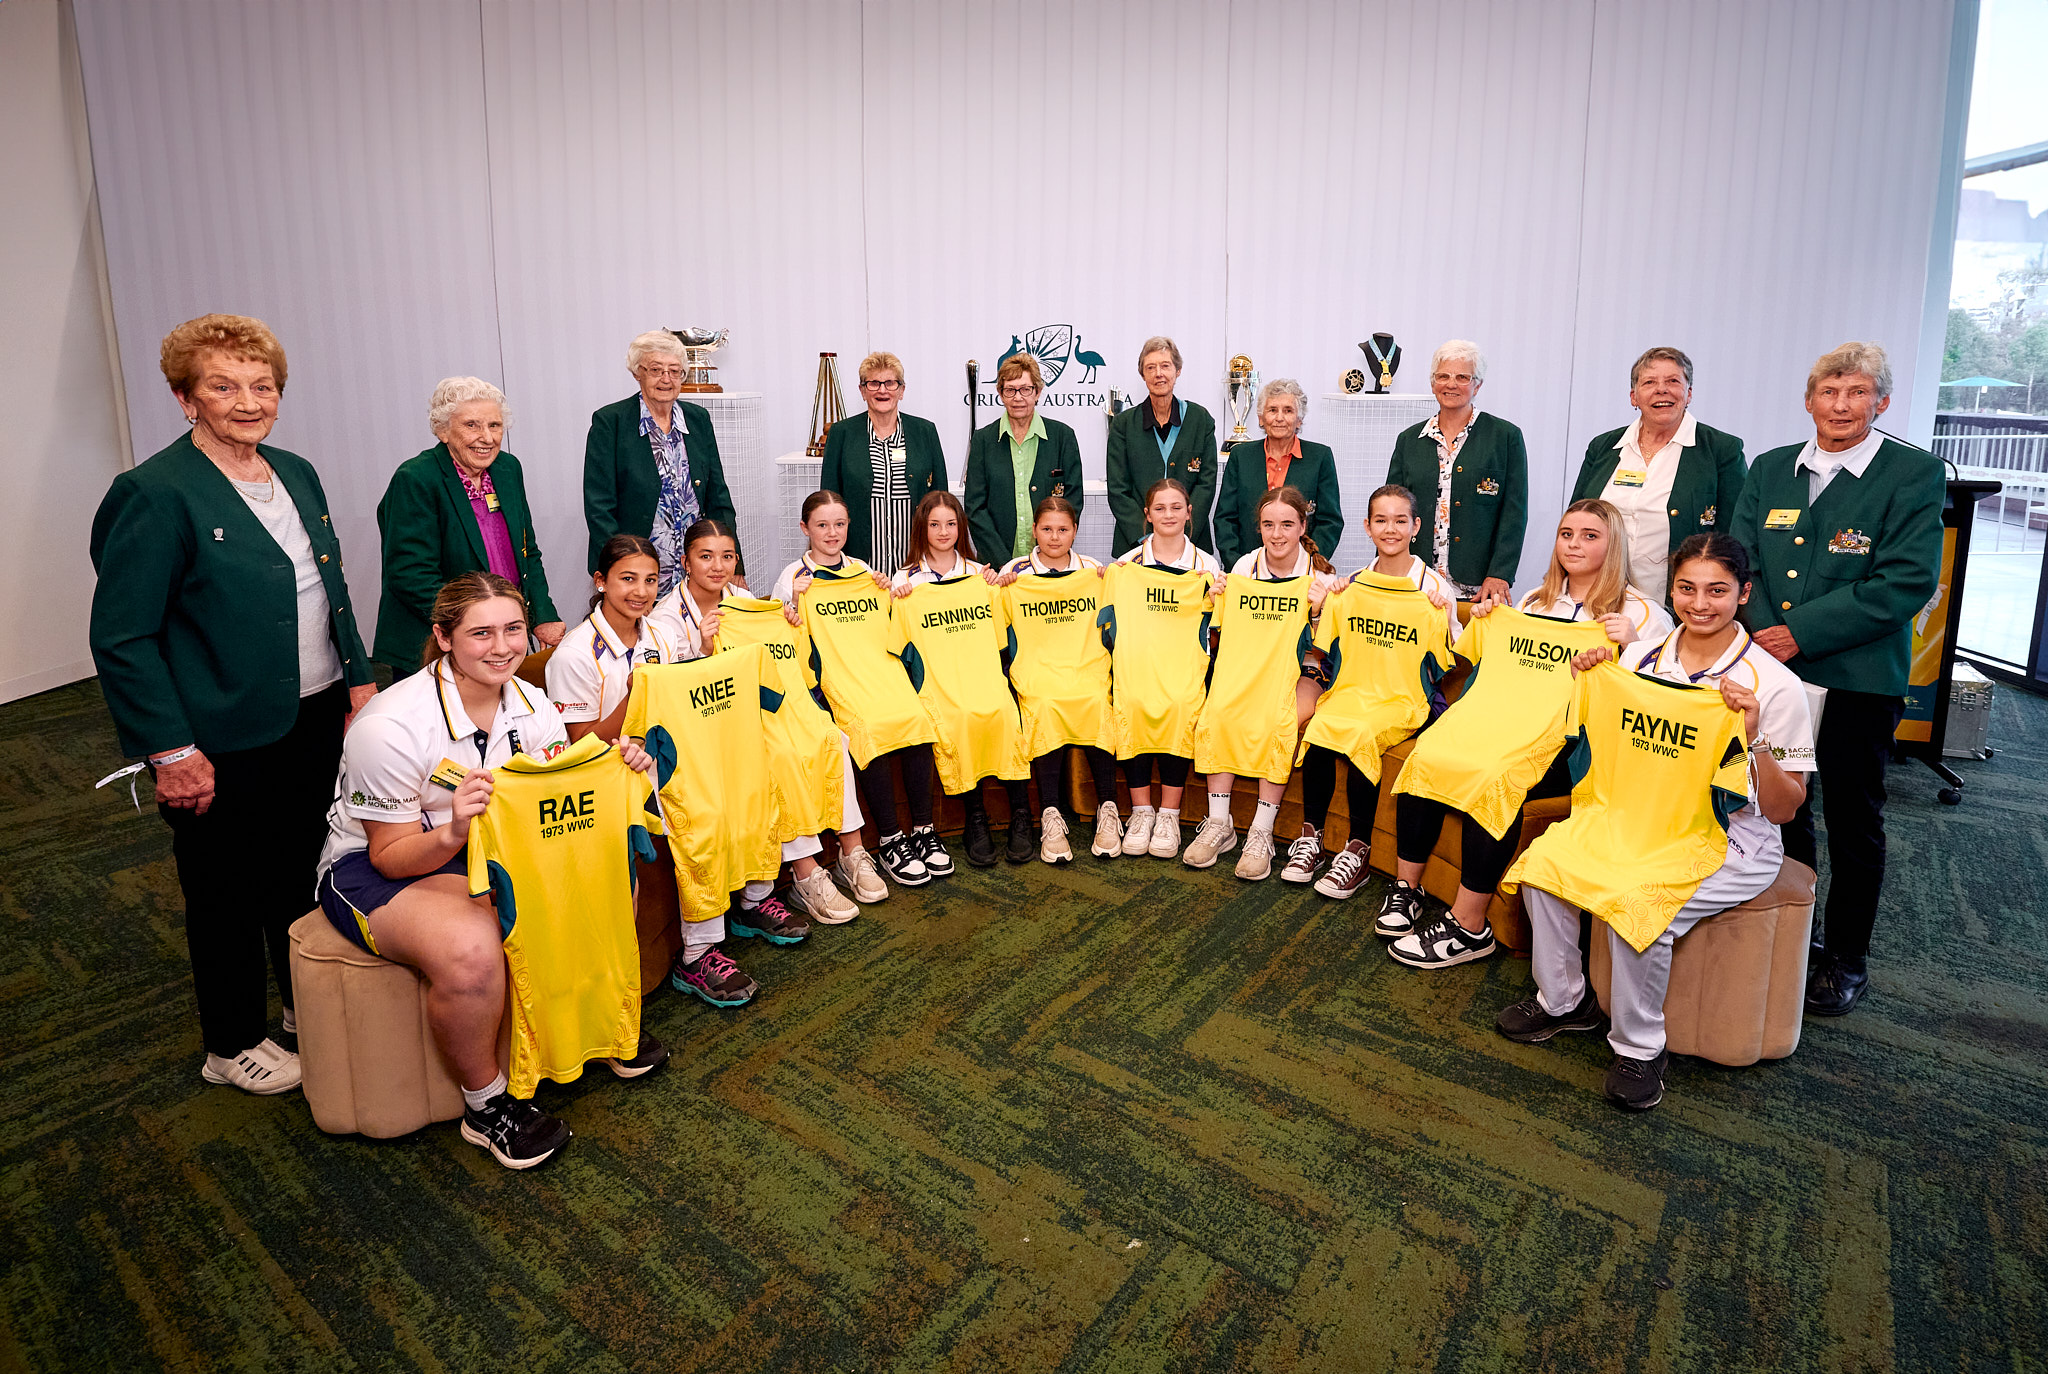 The 1973 Australian women's World Cup team with junior crickters